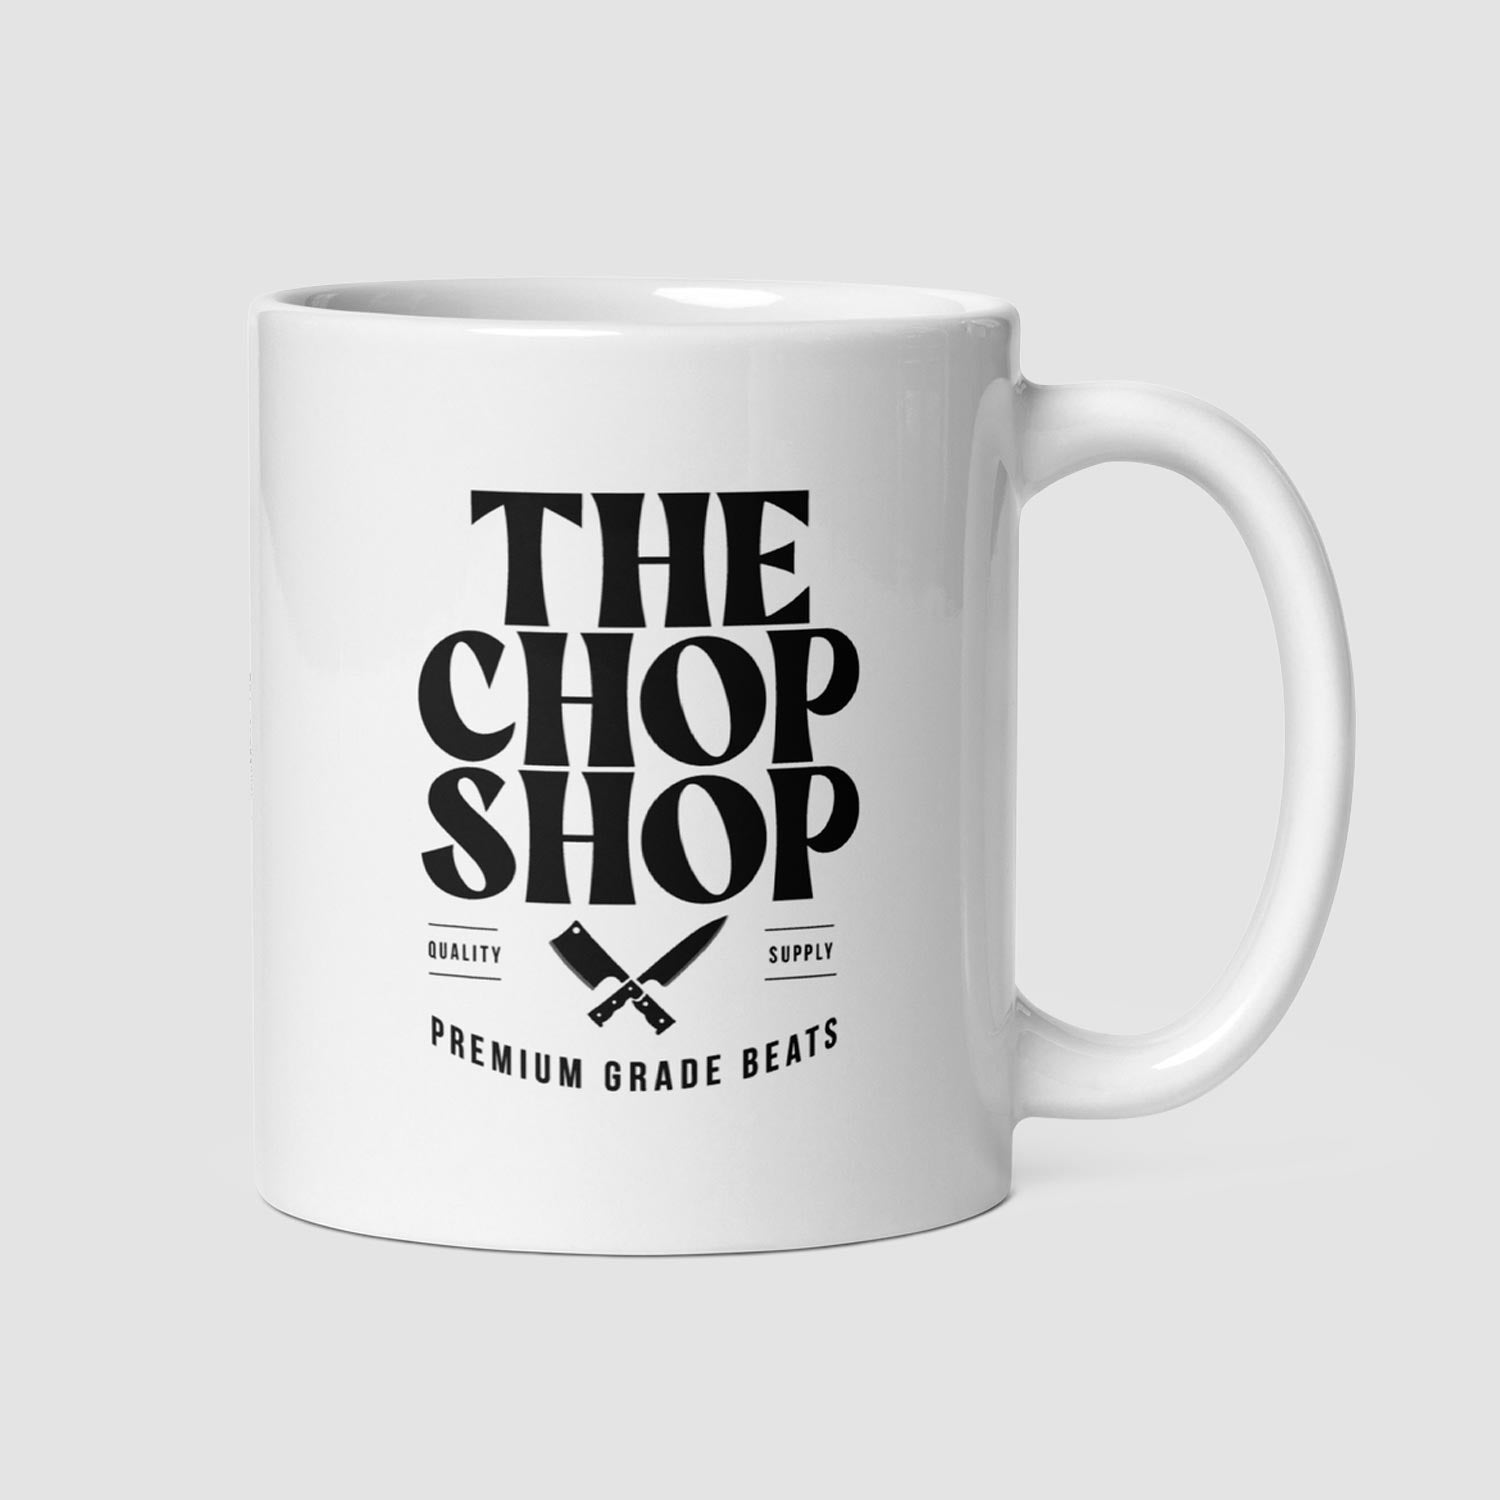 The Chop Shop Mug